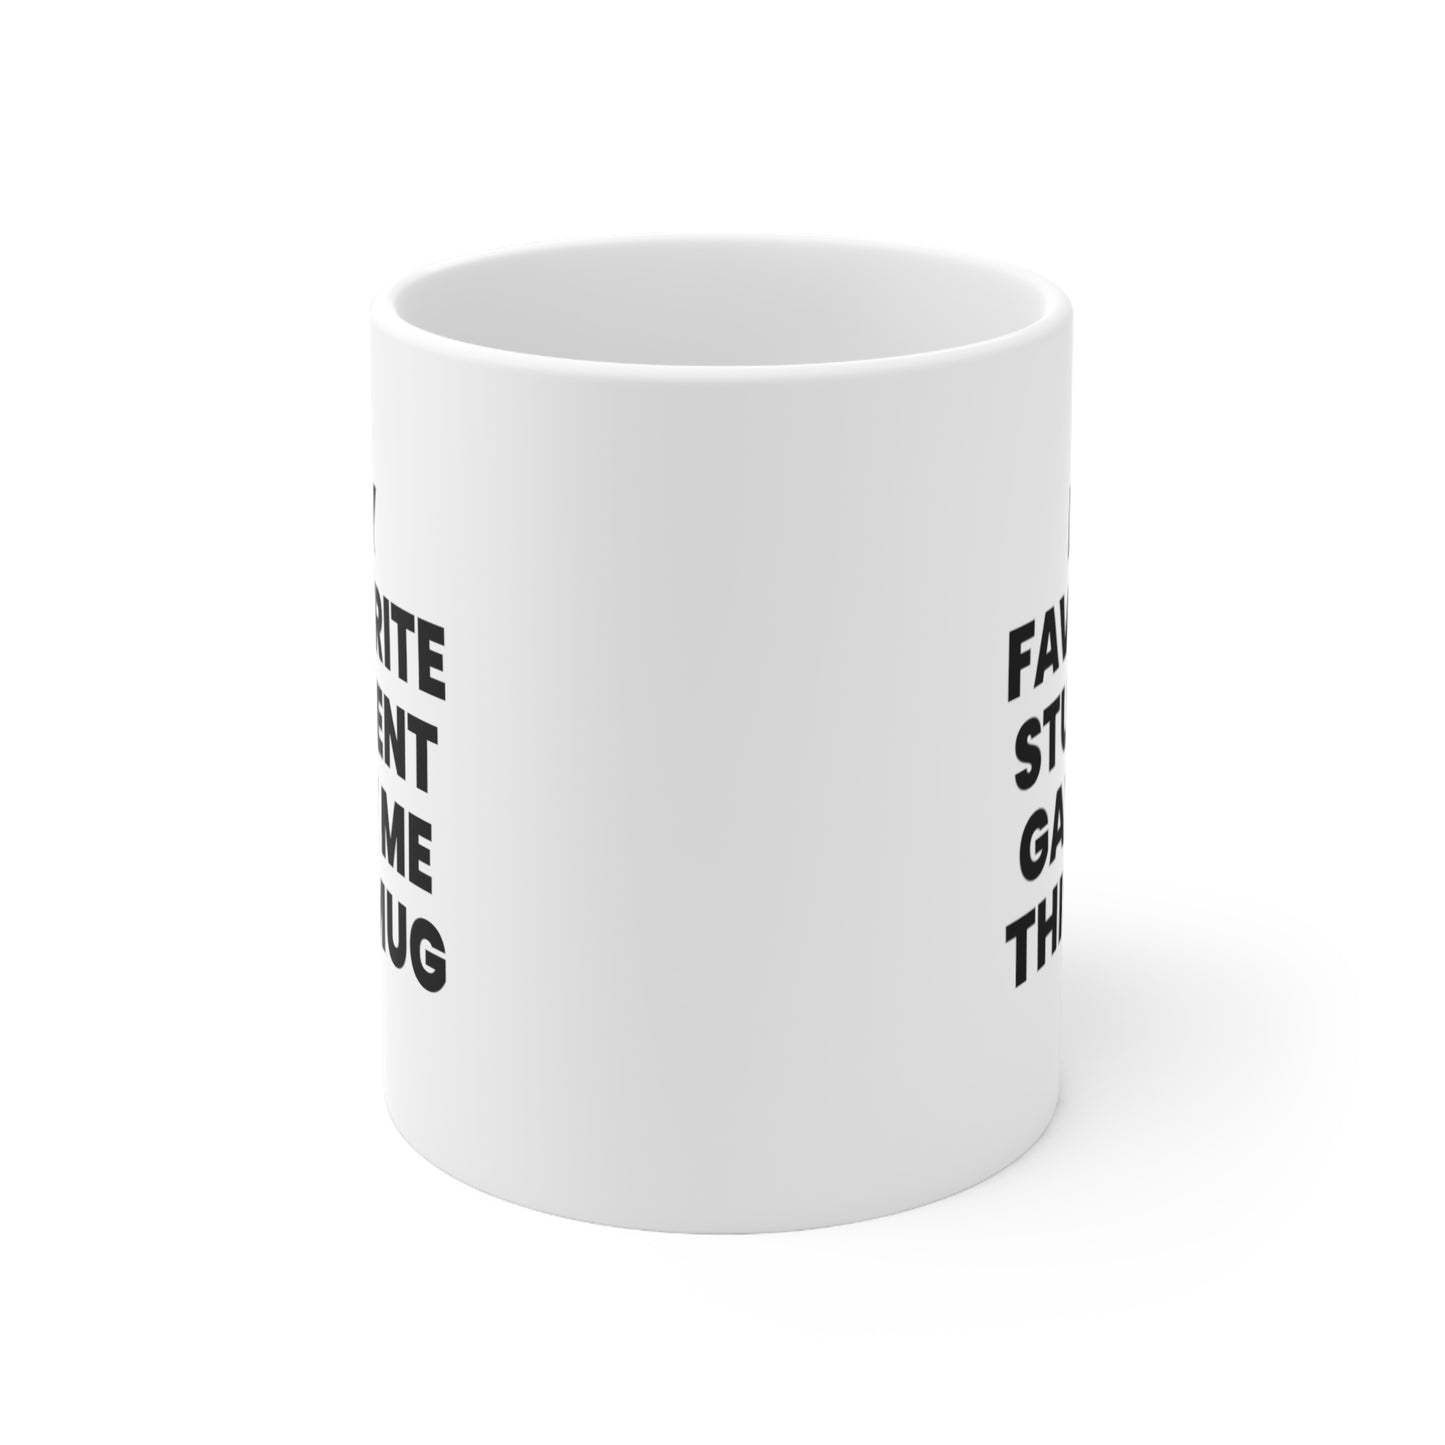 My Favorite Student Gave Me This Mug Coffee Cup 11oz